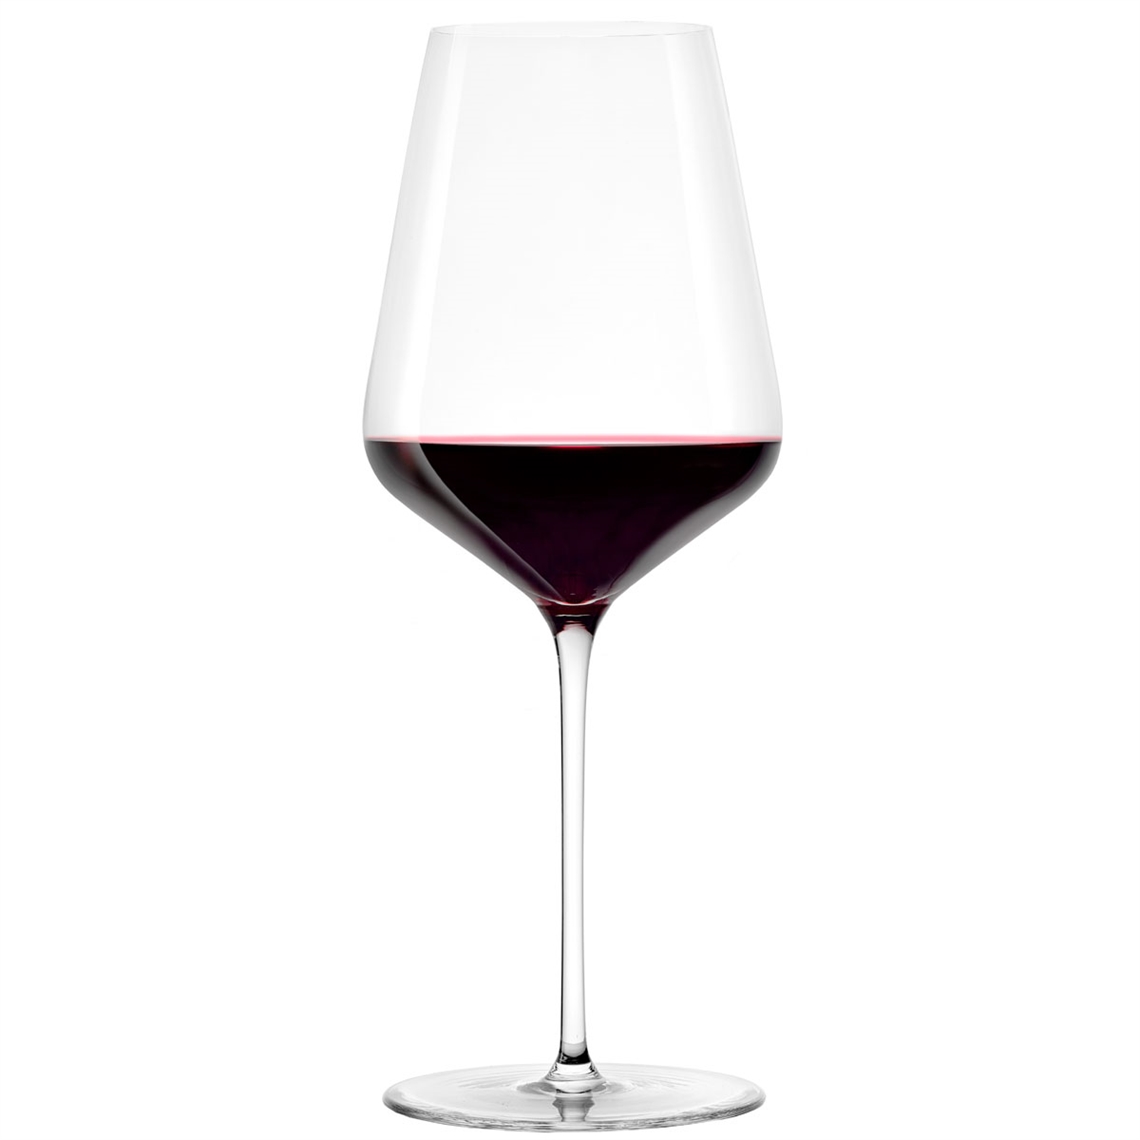 Stolzle STARlight Bordeaux Red Wine Glass - Set of 6